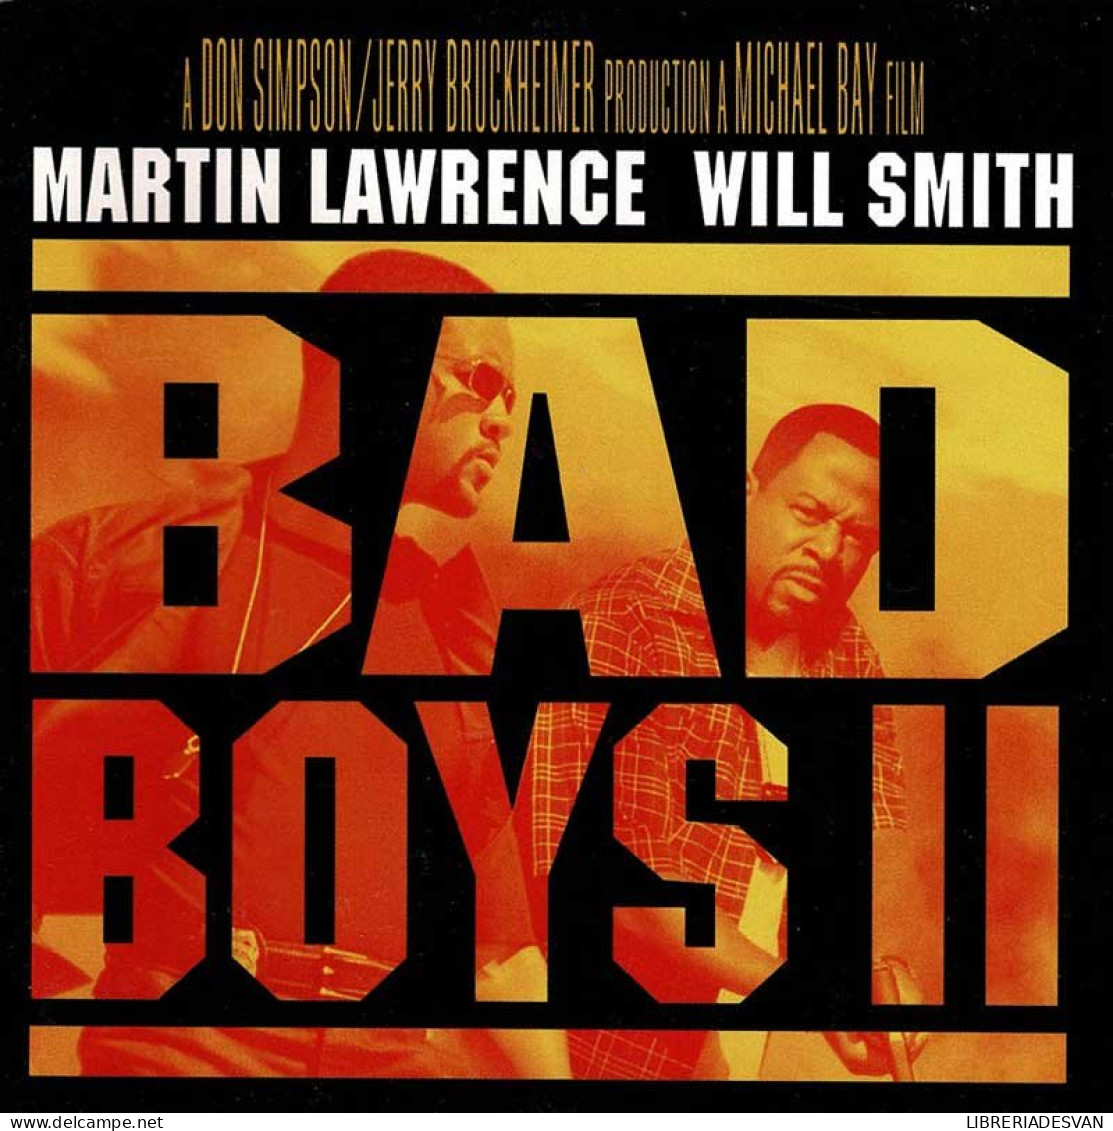 Bad Boys II - The Soundtrack. CD - Soundtracks, Film Music